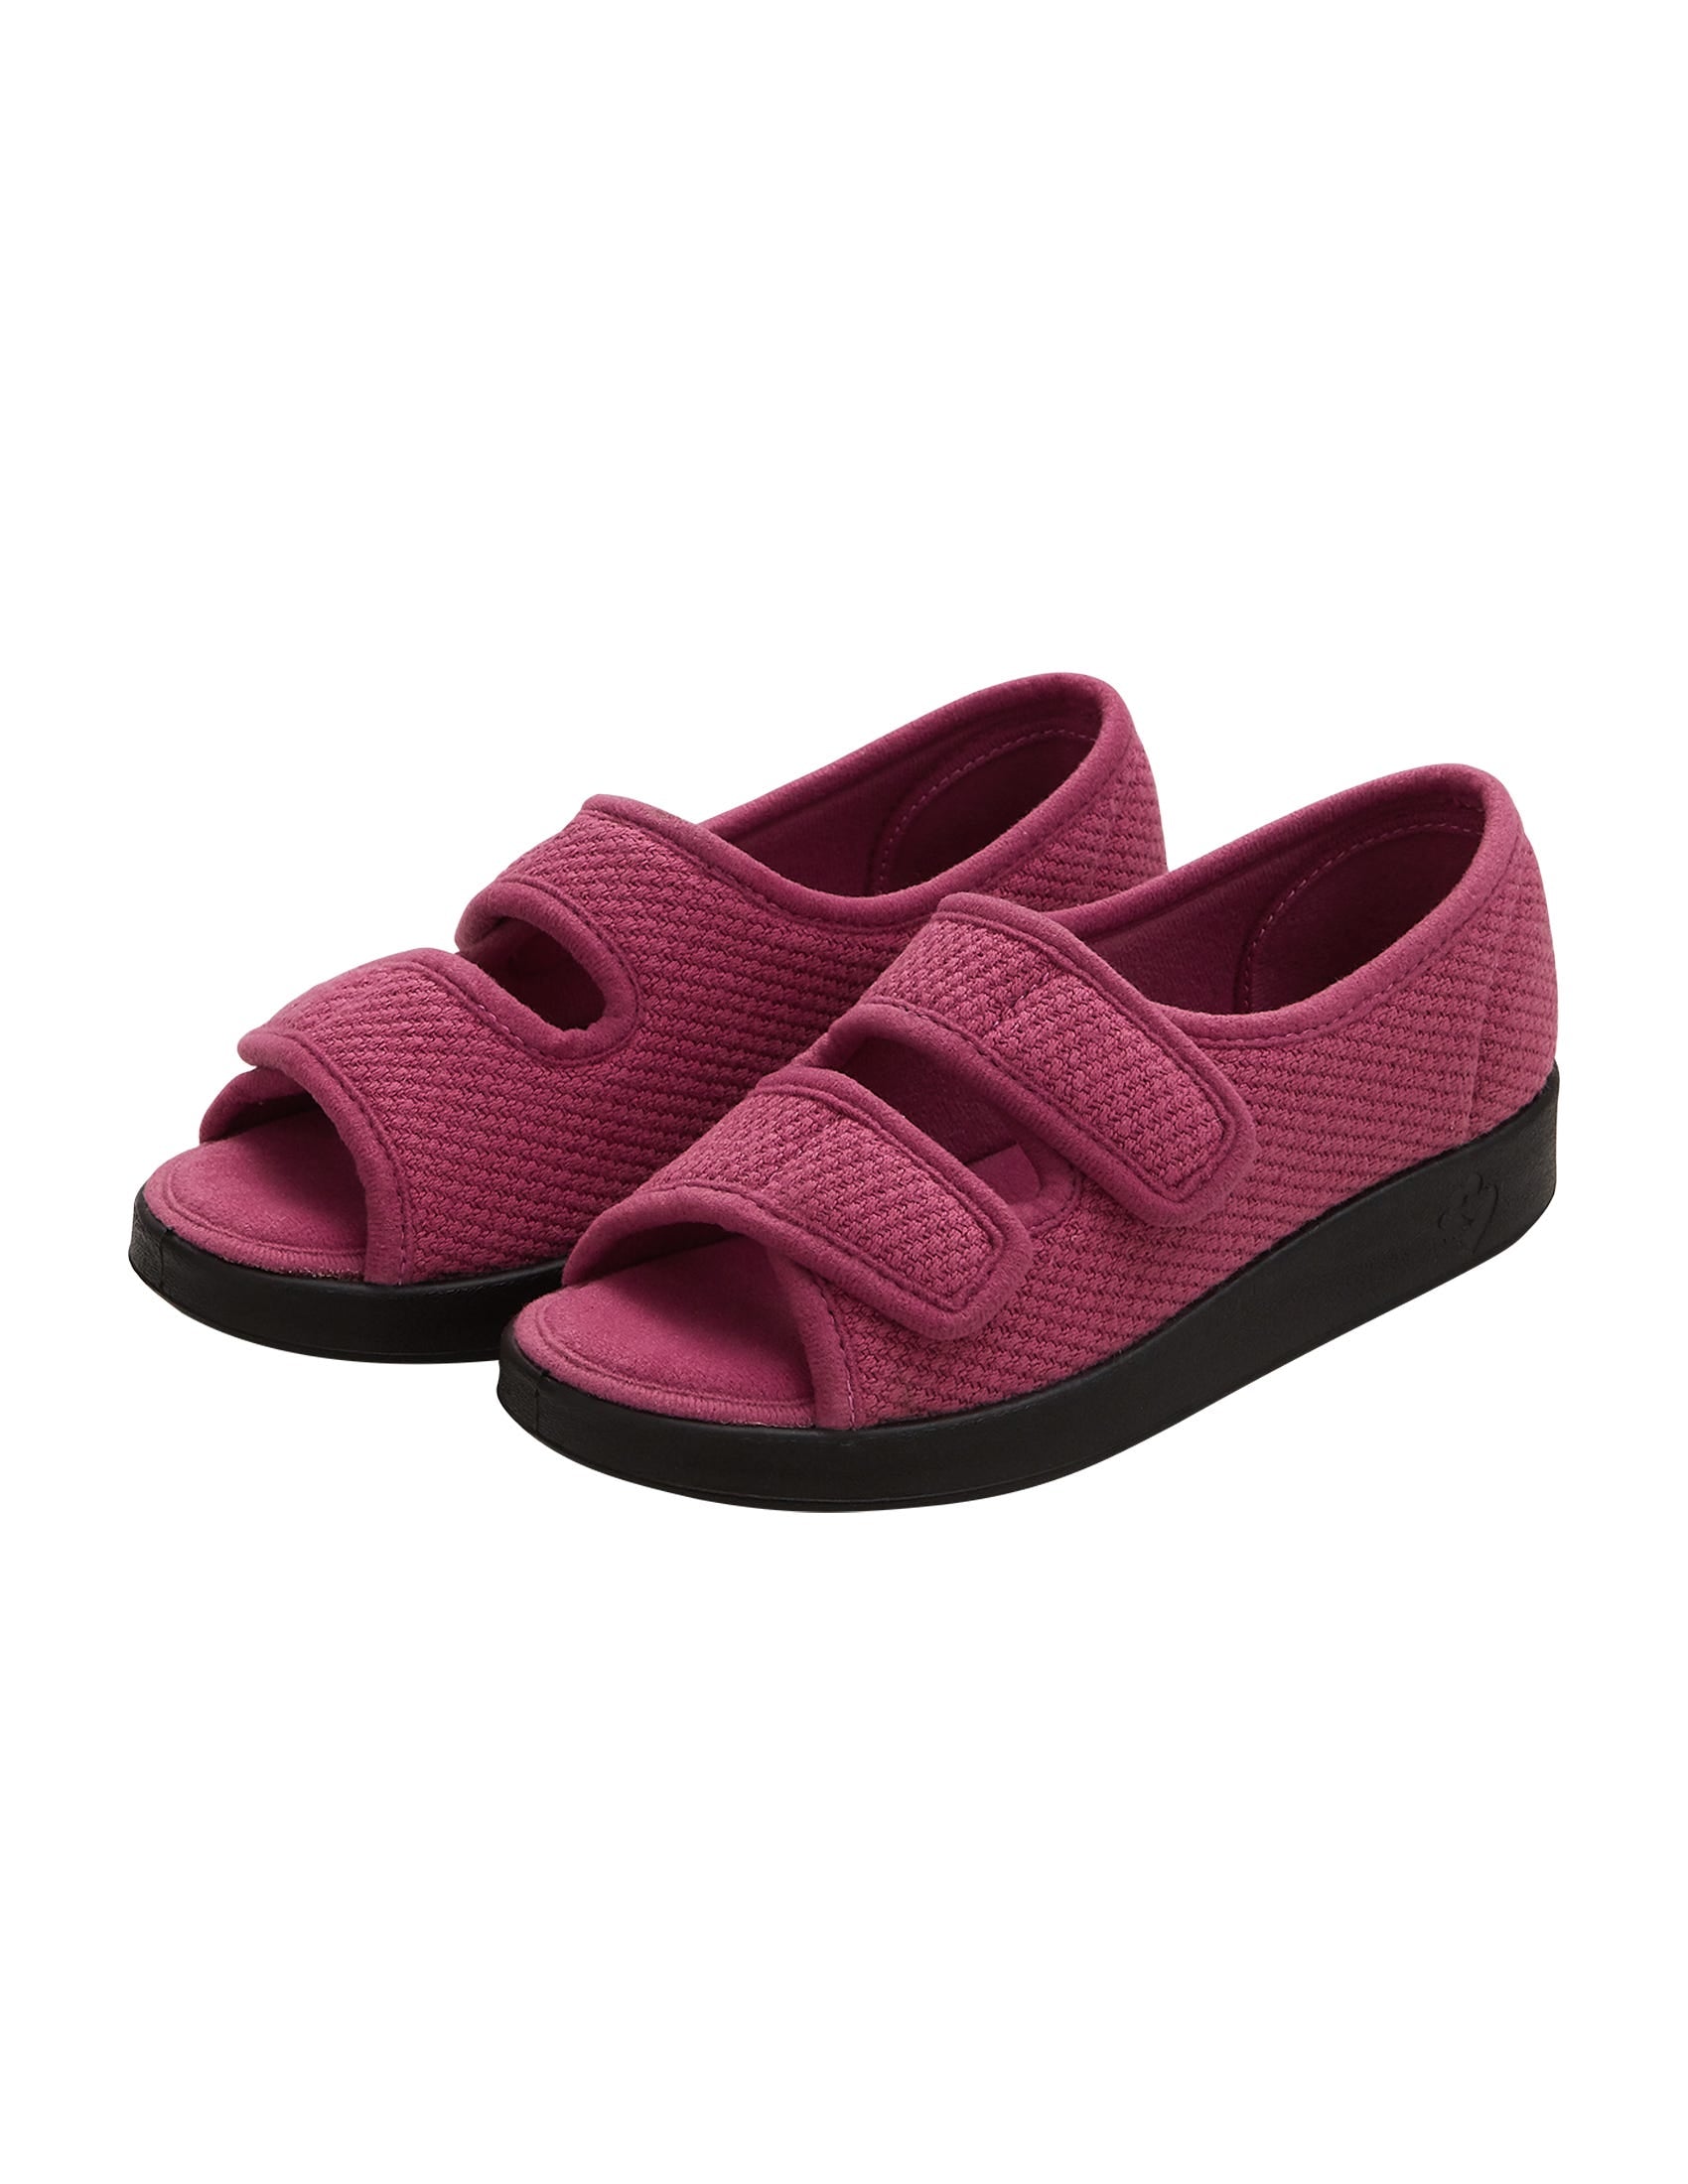 Silverts Women's Easy Closure Sandals - Rose Petal - 10